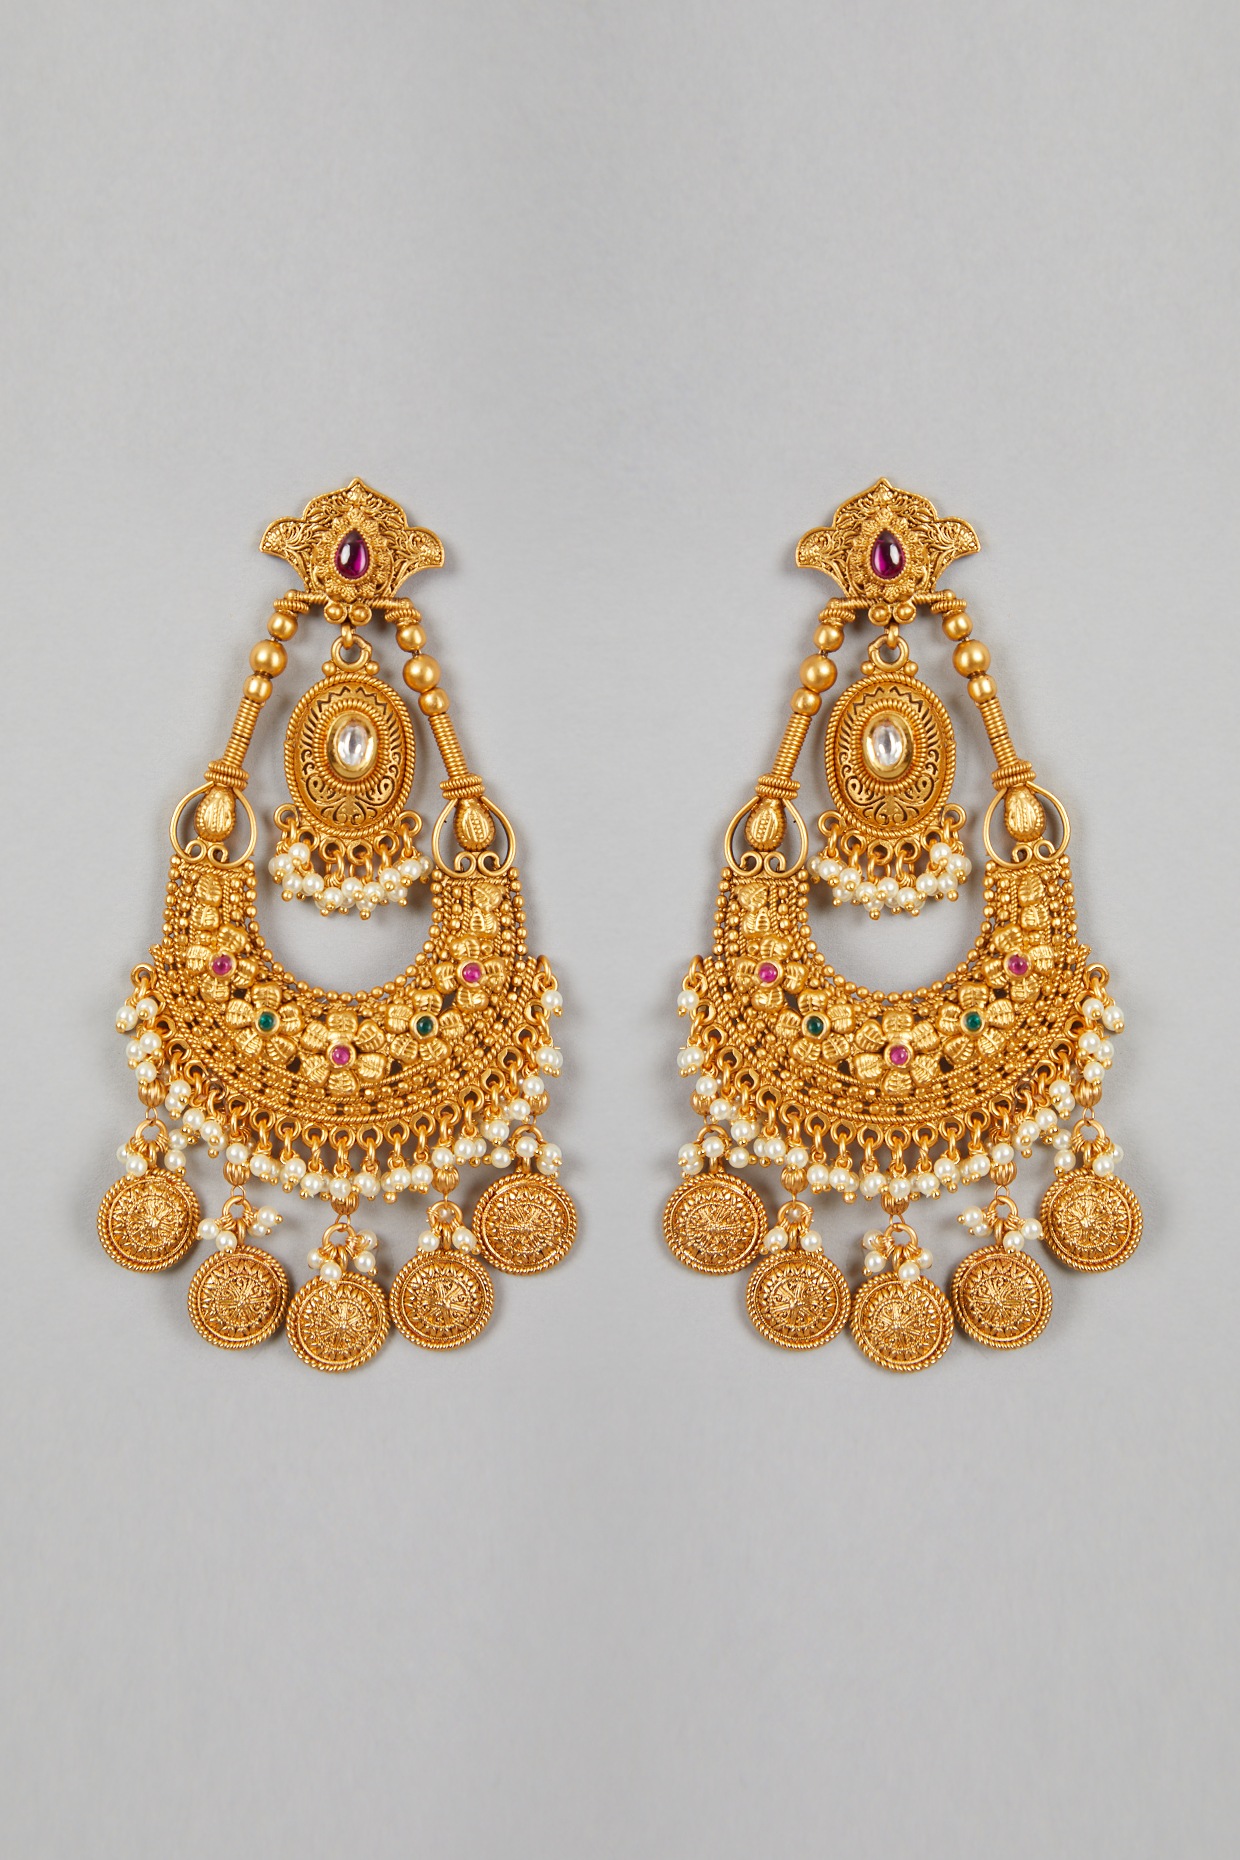 6 Best Long Gold Earrings Designs for Ladies - People choice